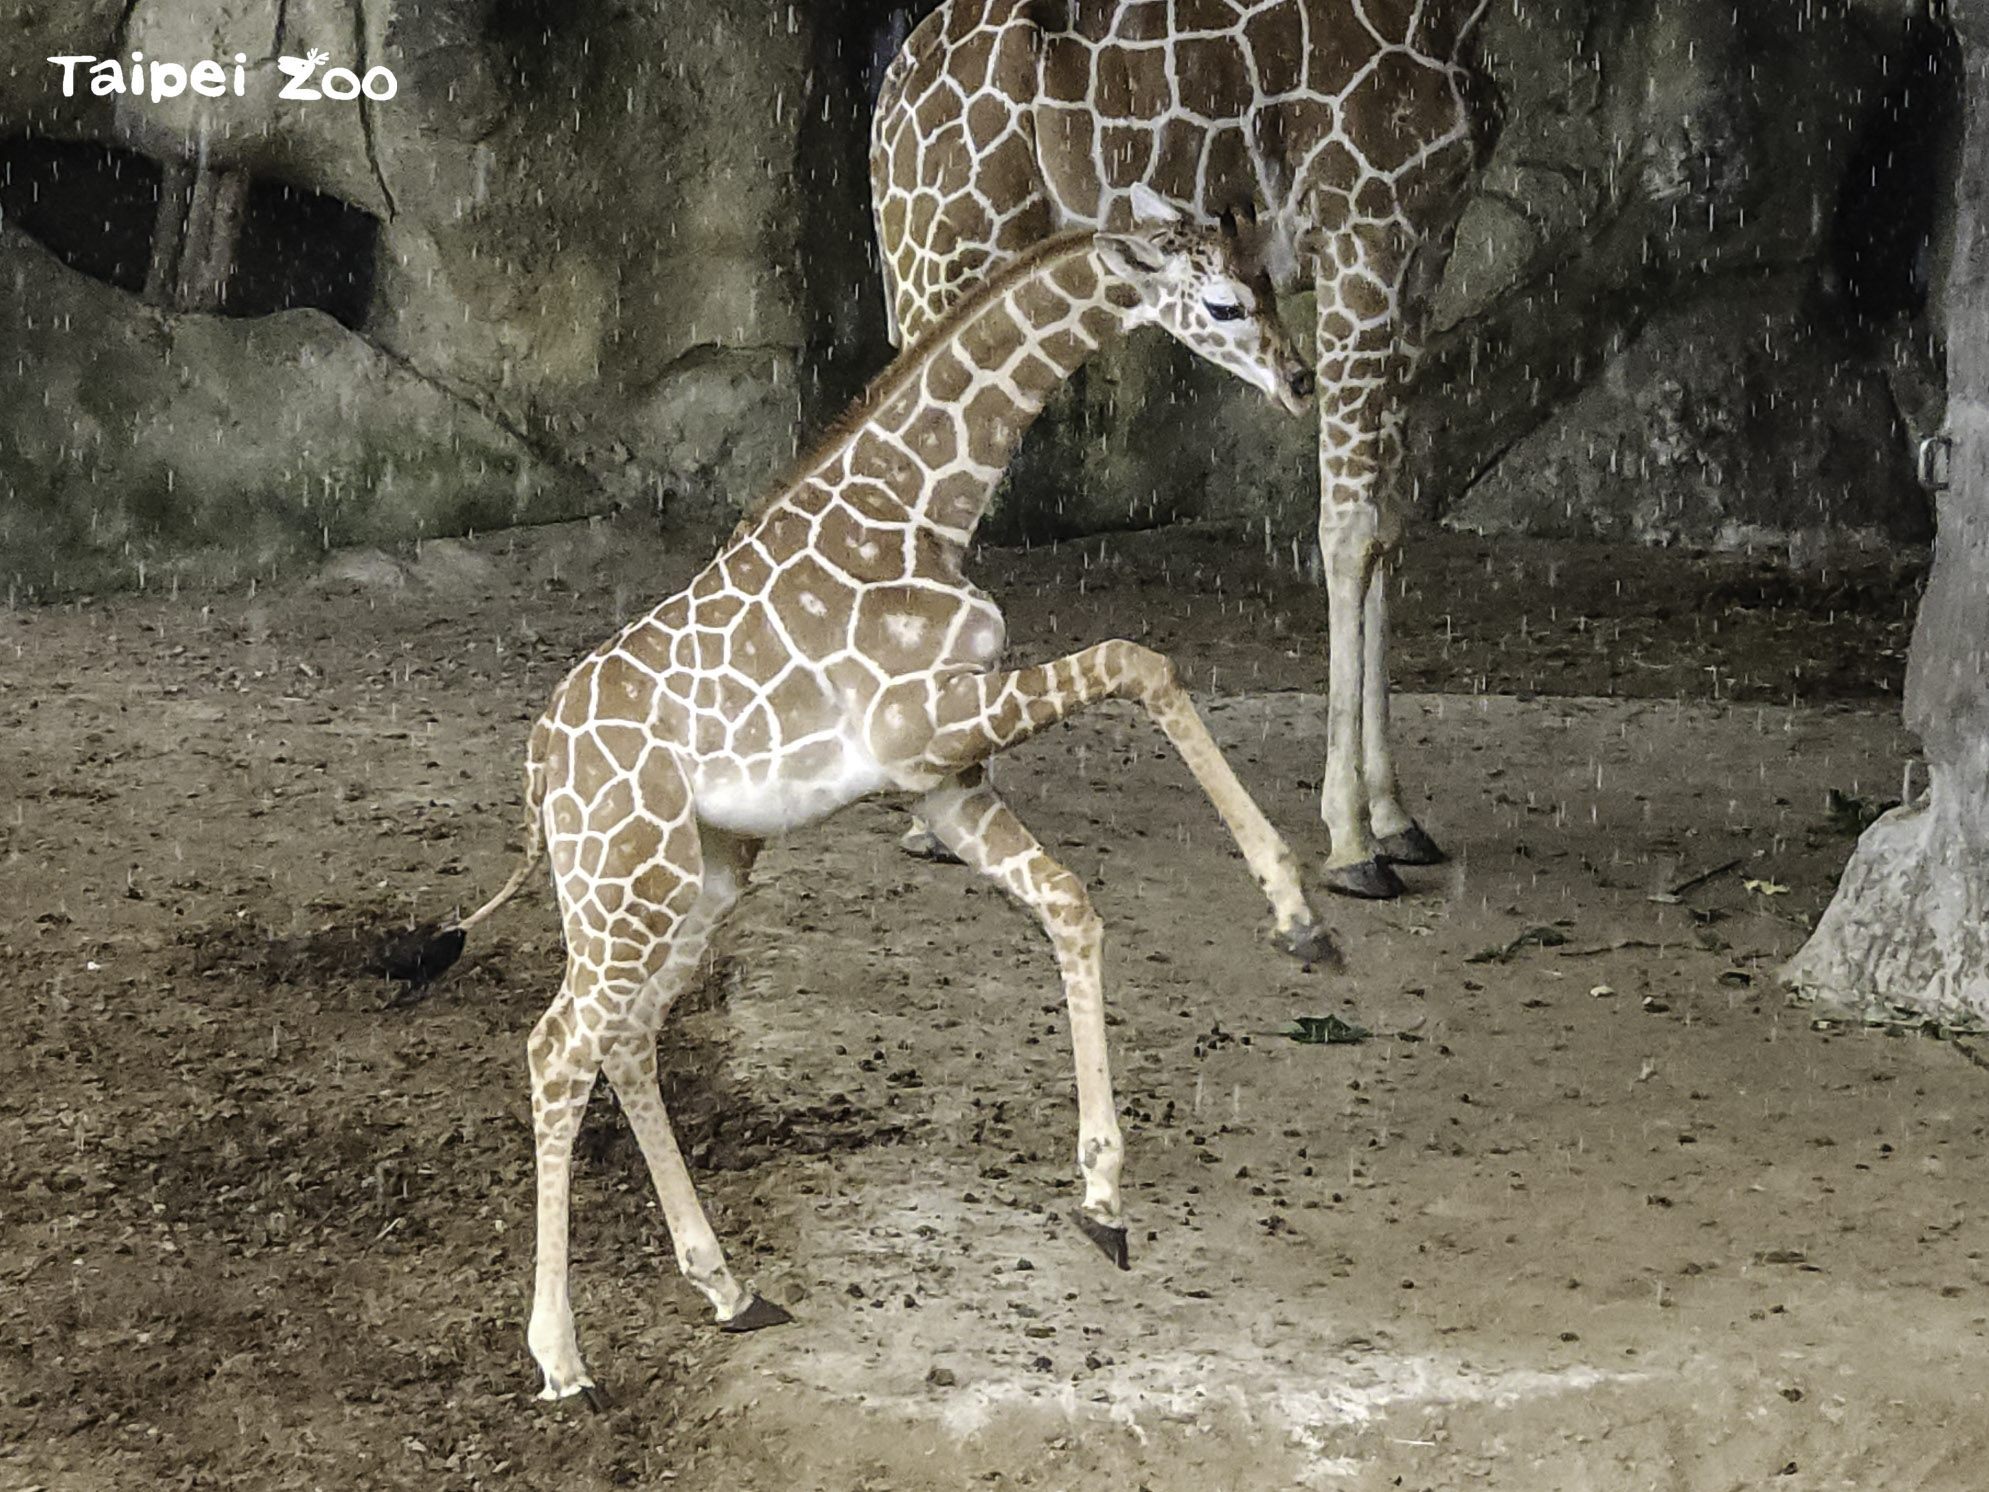 The giraffe calf at Taipei Zoo - three months after birth.